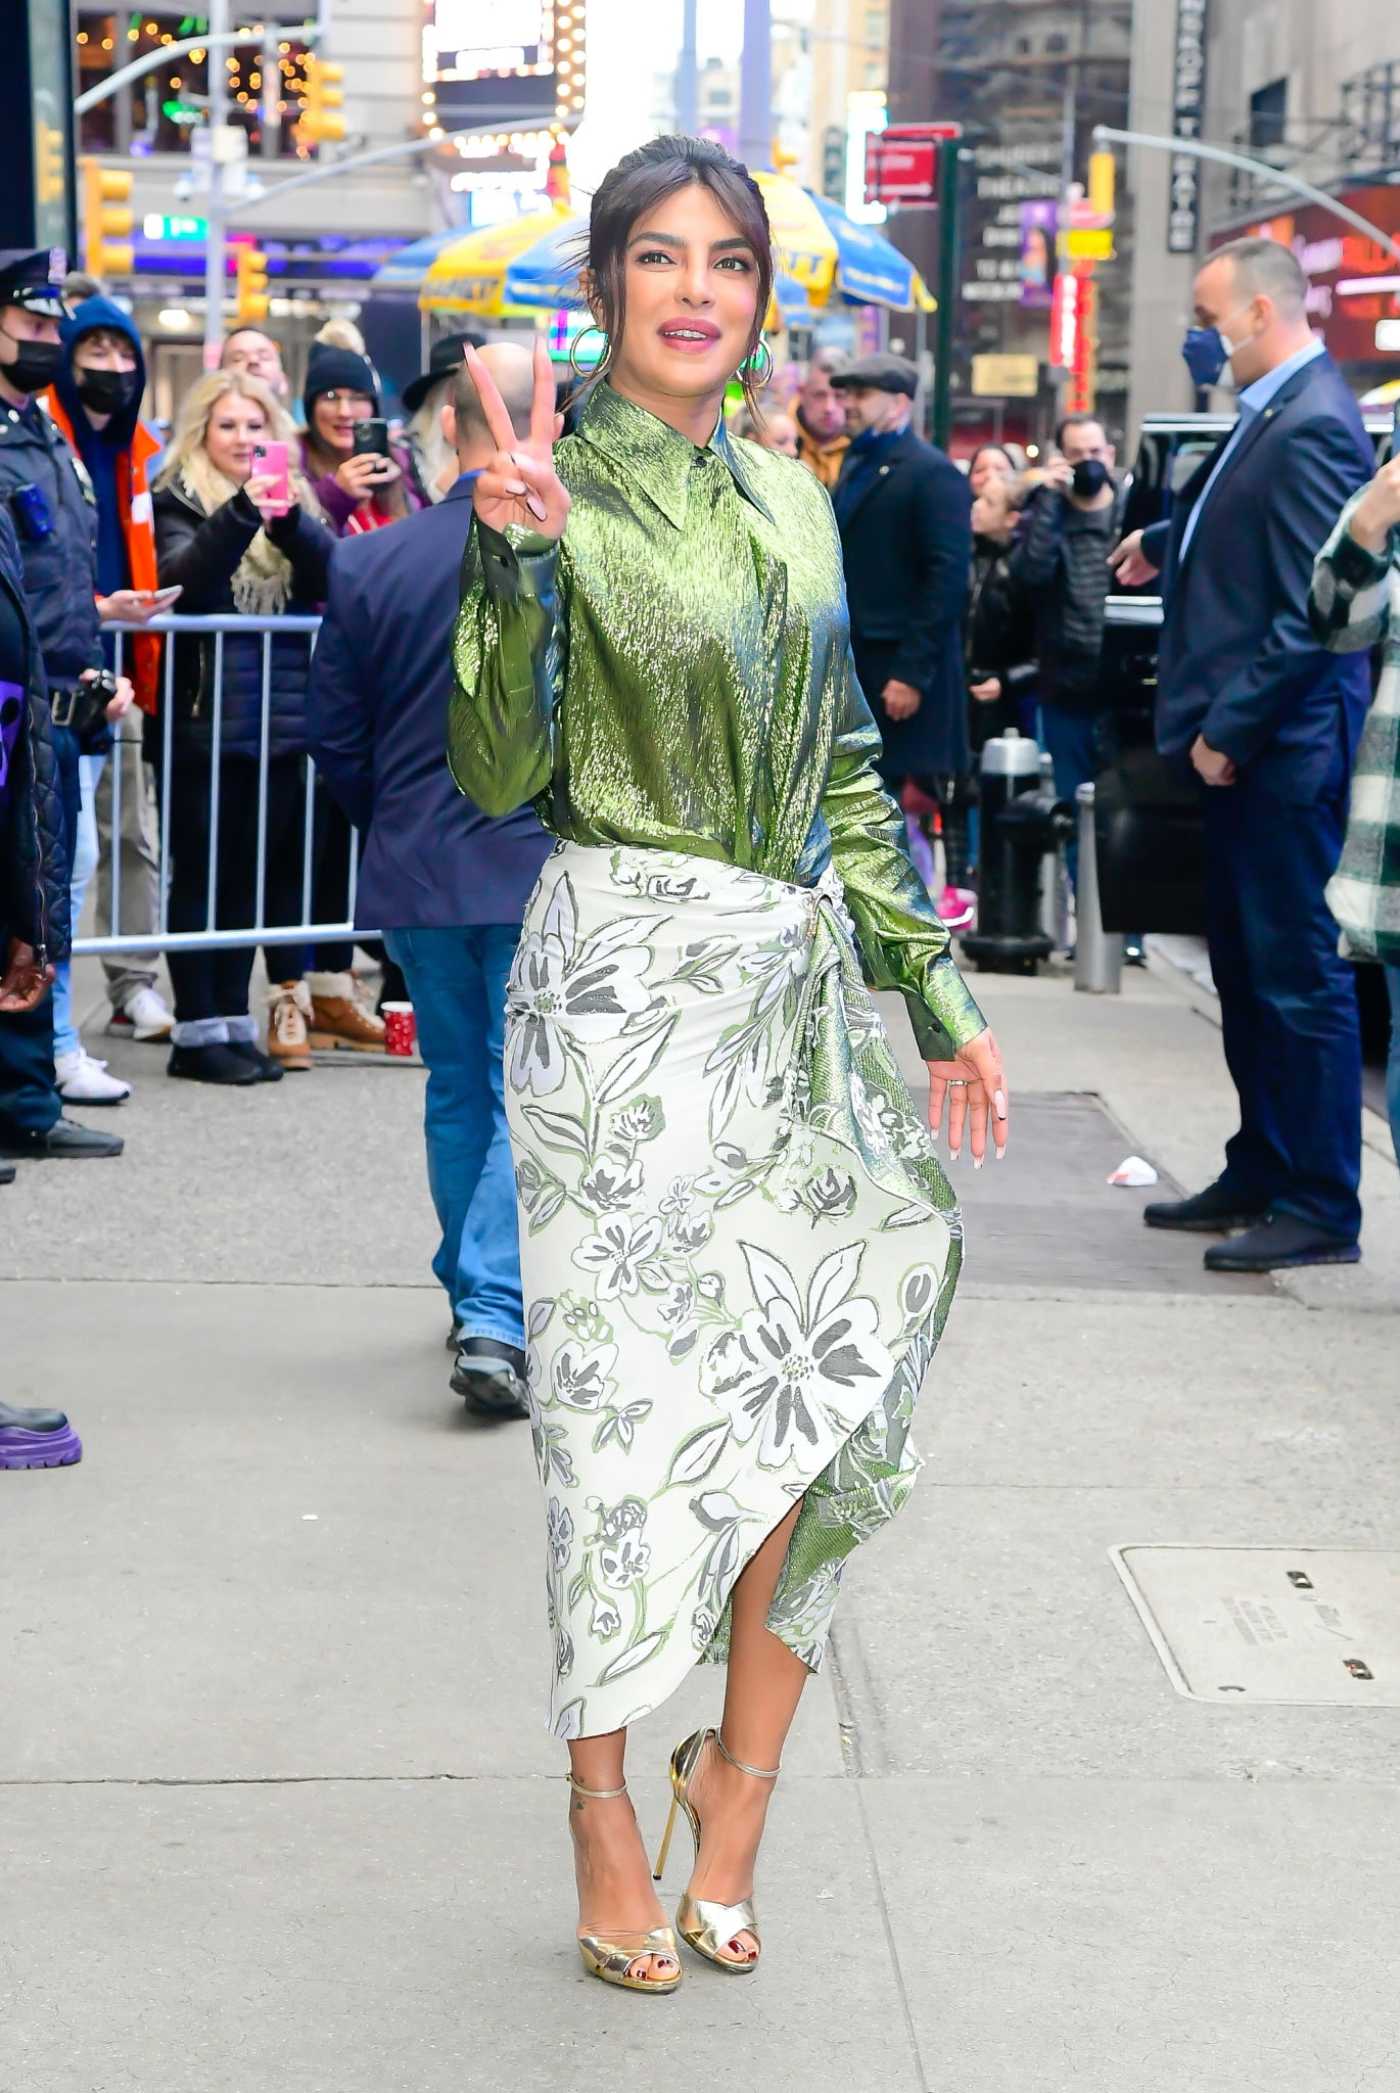 Priyanka Chopra in a Green Blouse Arrives at Good Morning America in New York City 12/16/2021